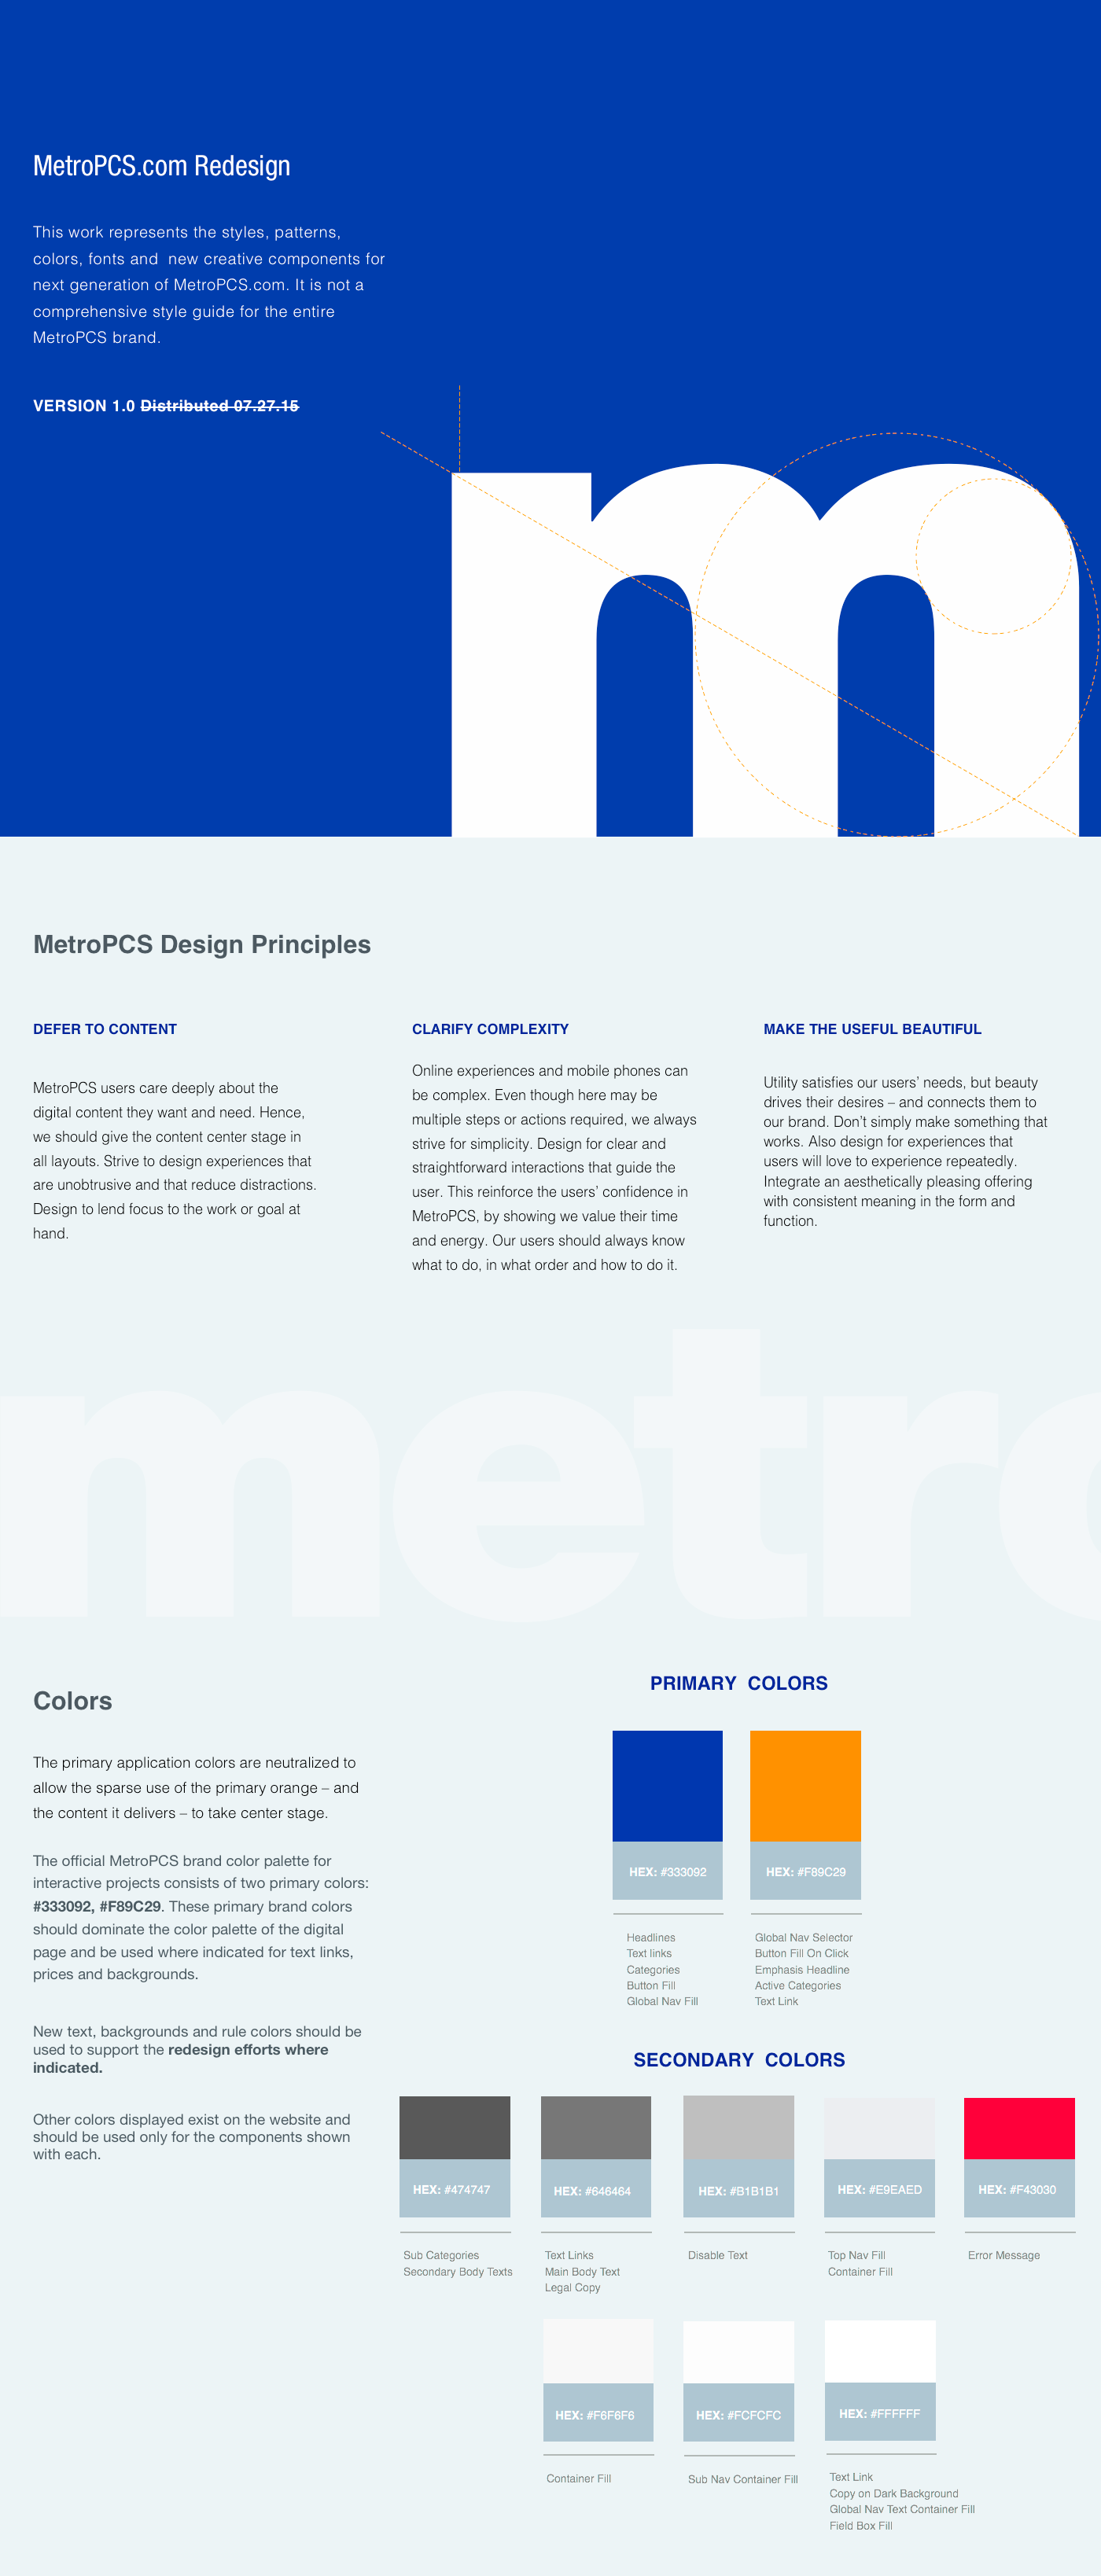 MetroPCS redesign